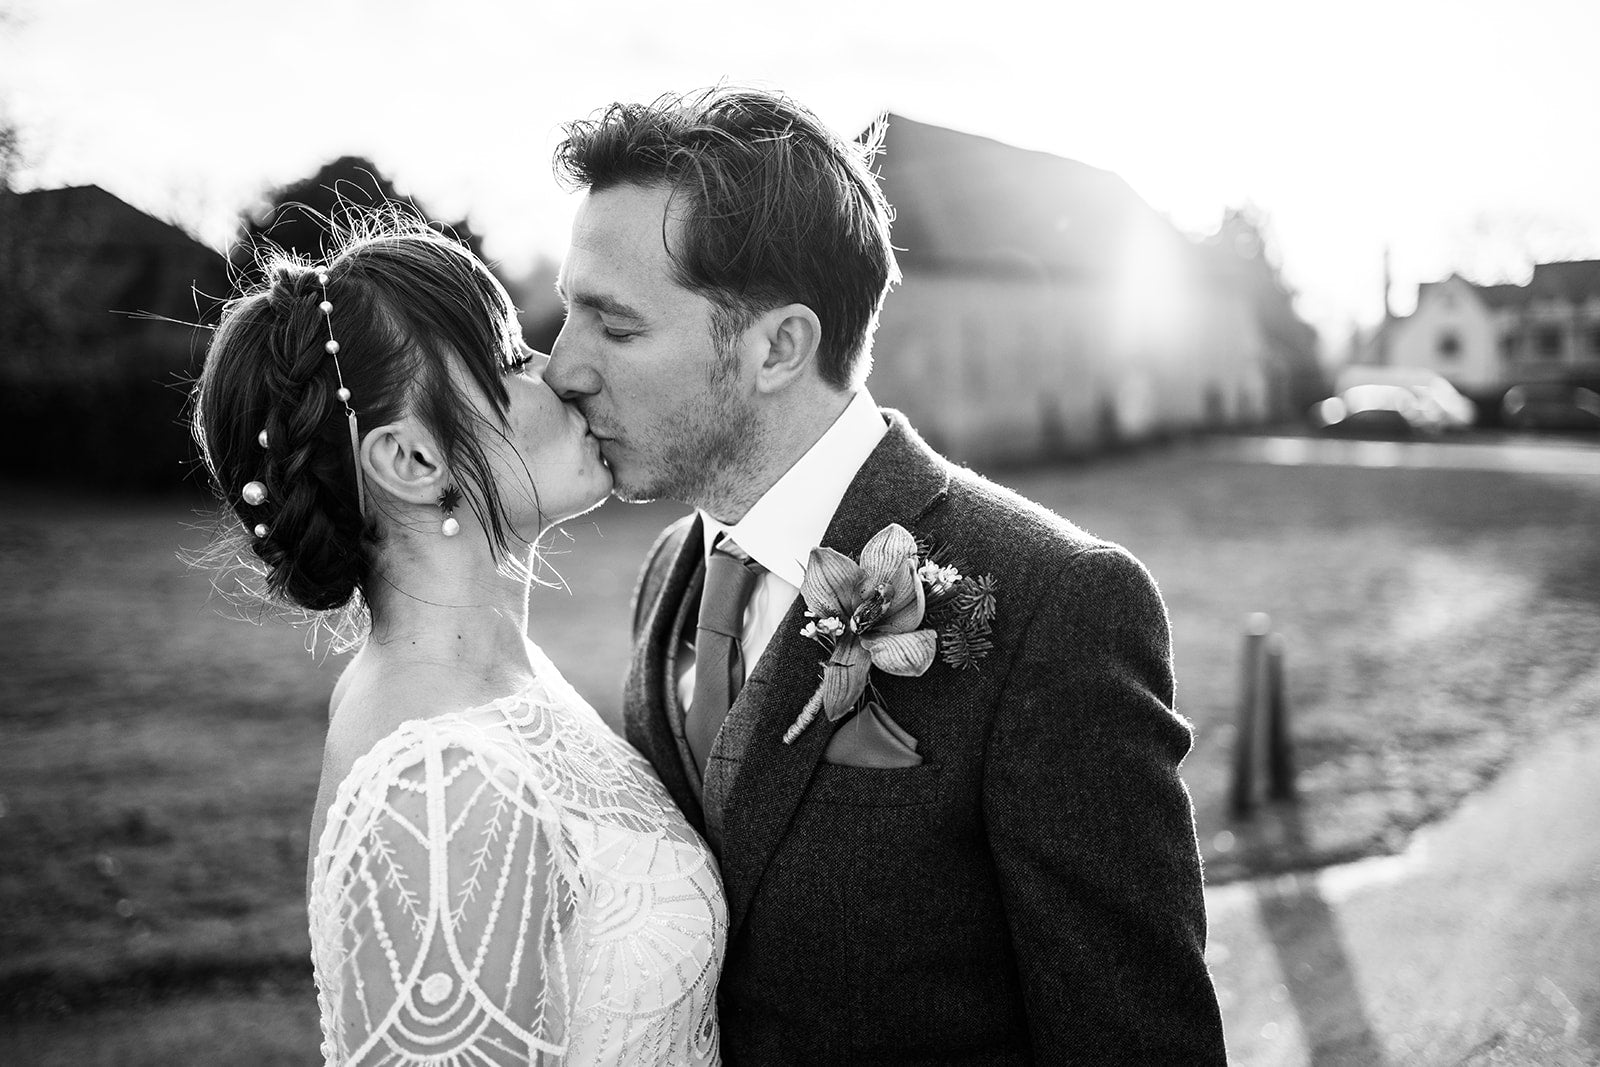 Pearl headbands for wedding - Bride and Groom kiss at their modern elegant rustic winter wedding